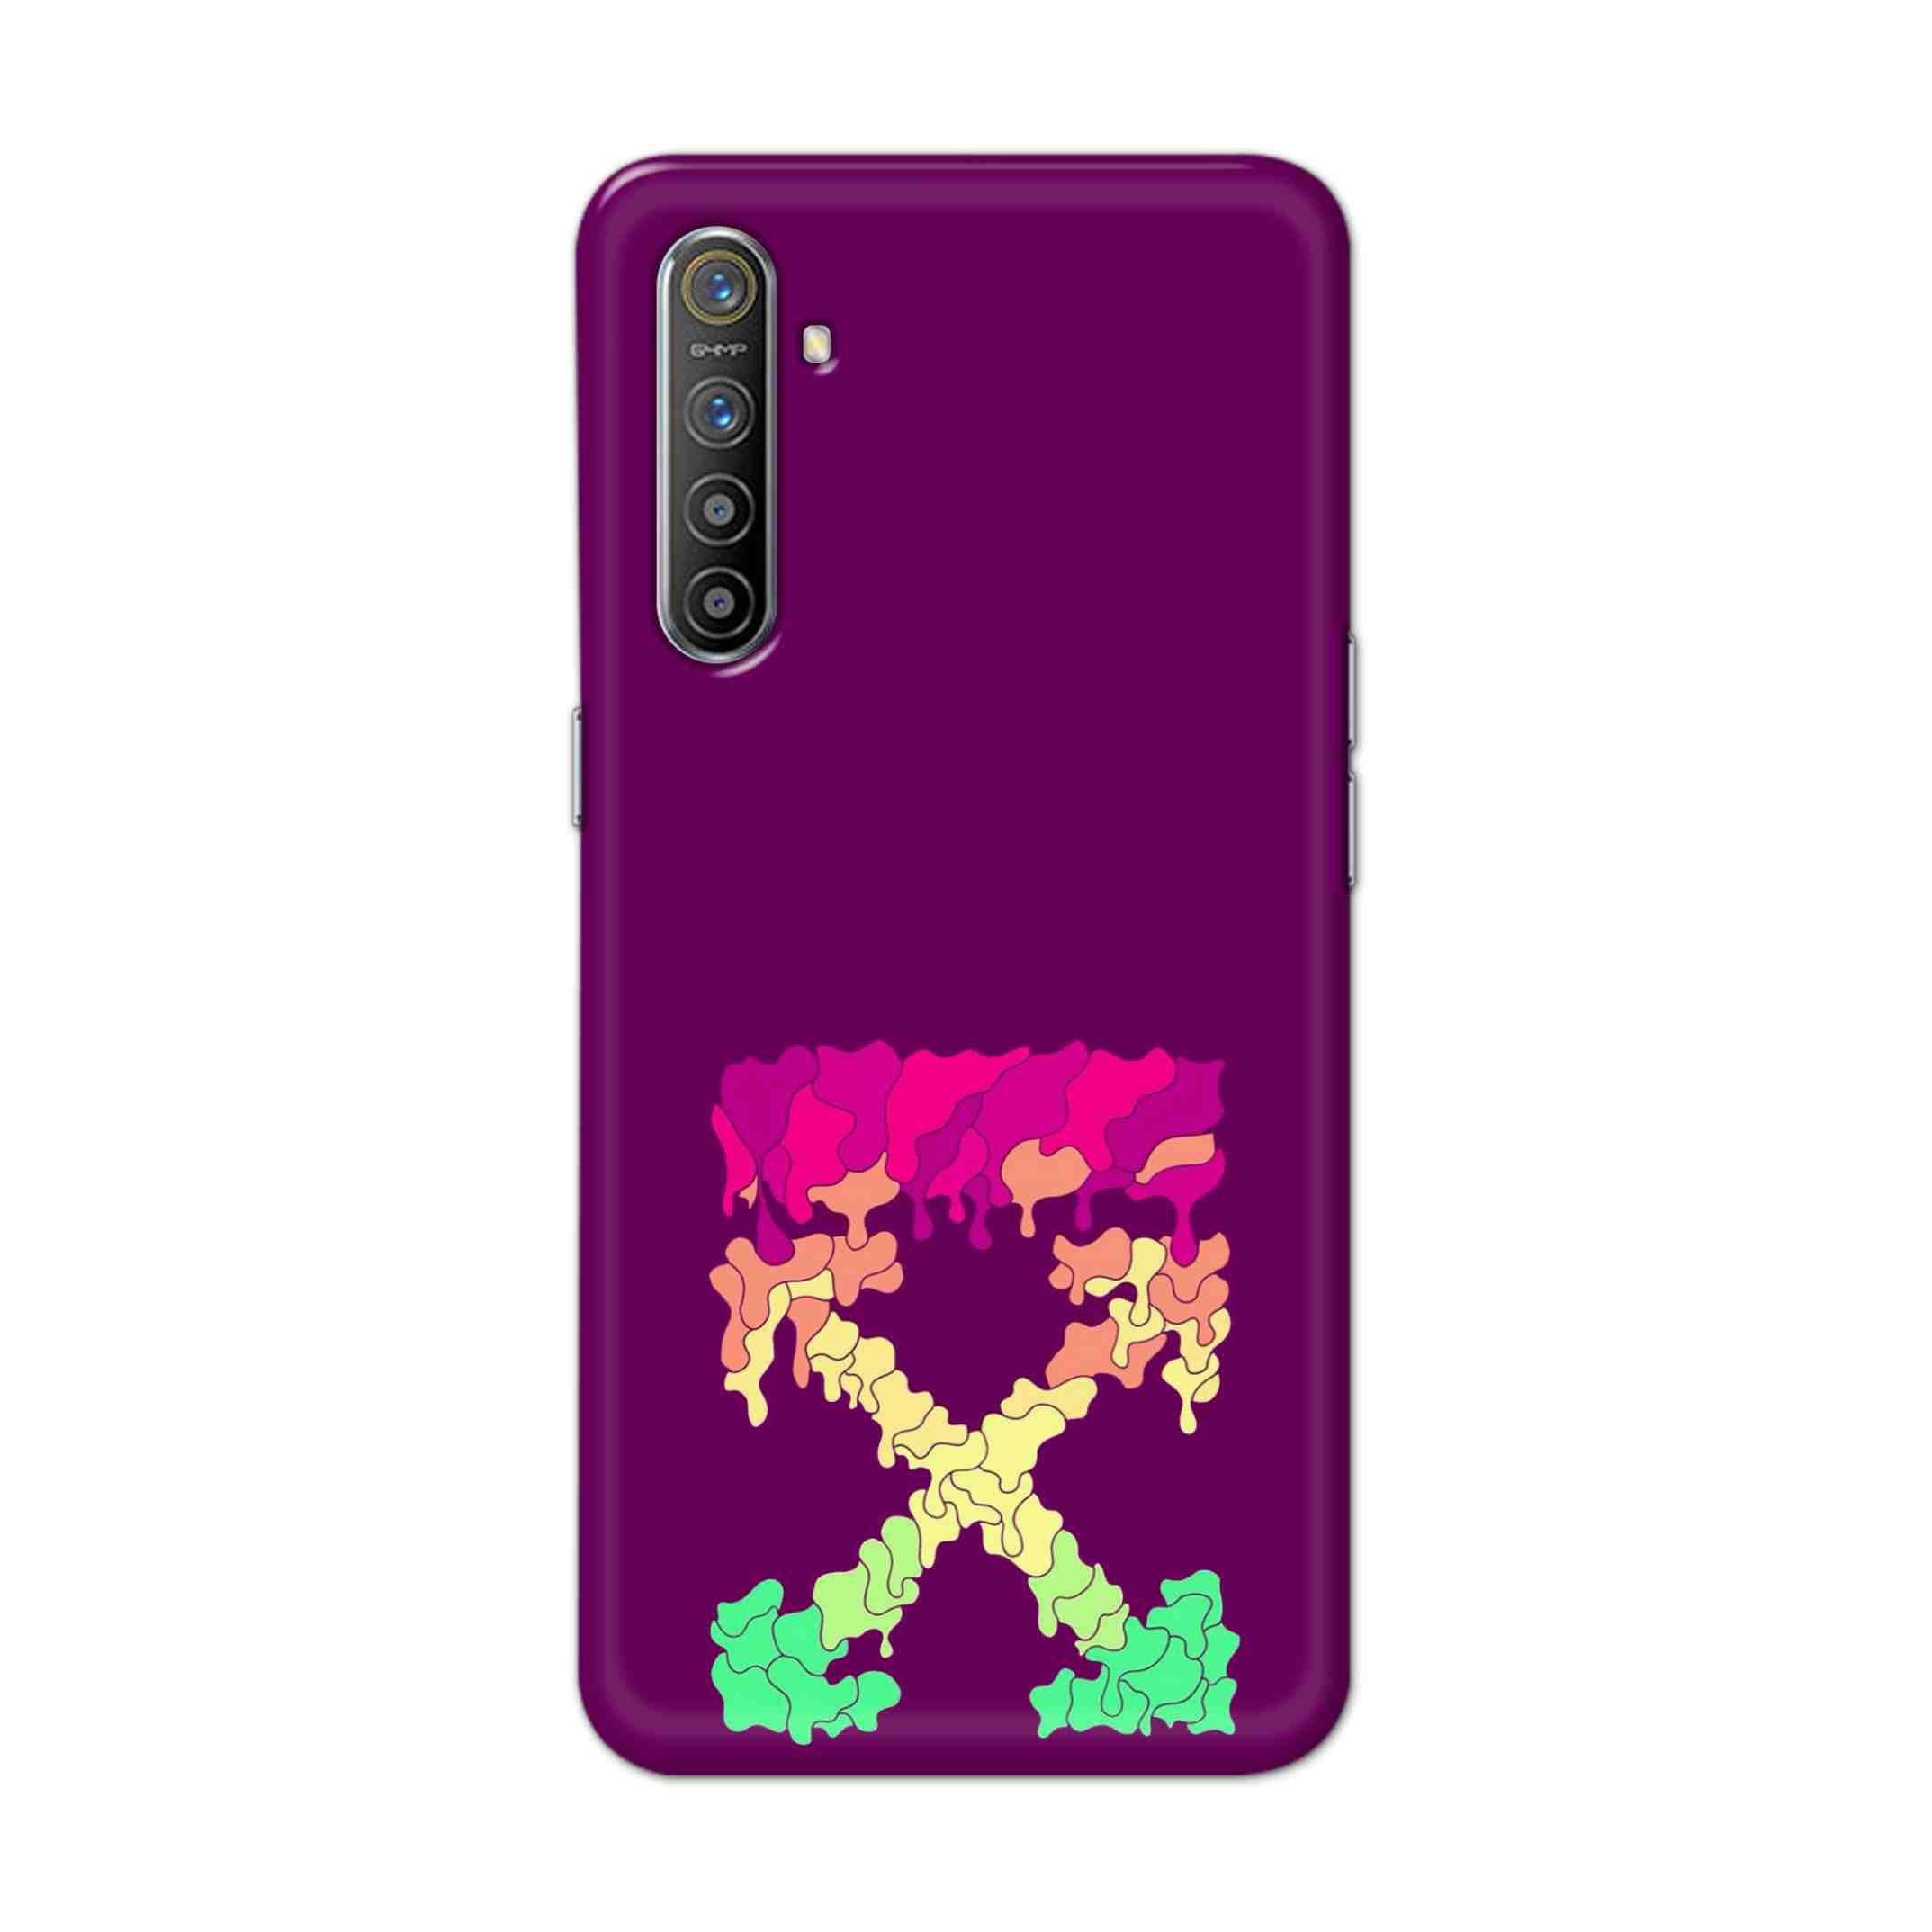 Buy X.O Hard Back Mobile Phone Case Cover For Oppo Realme XT Online